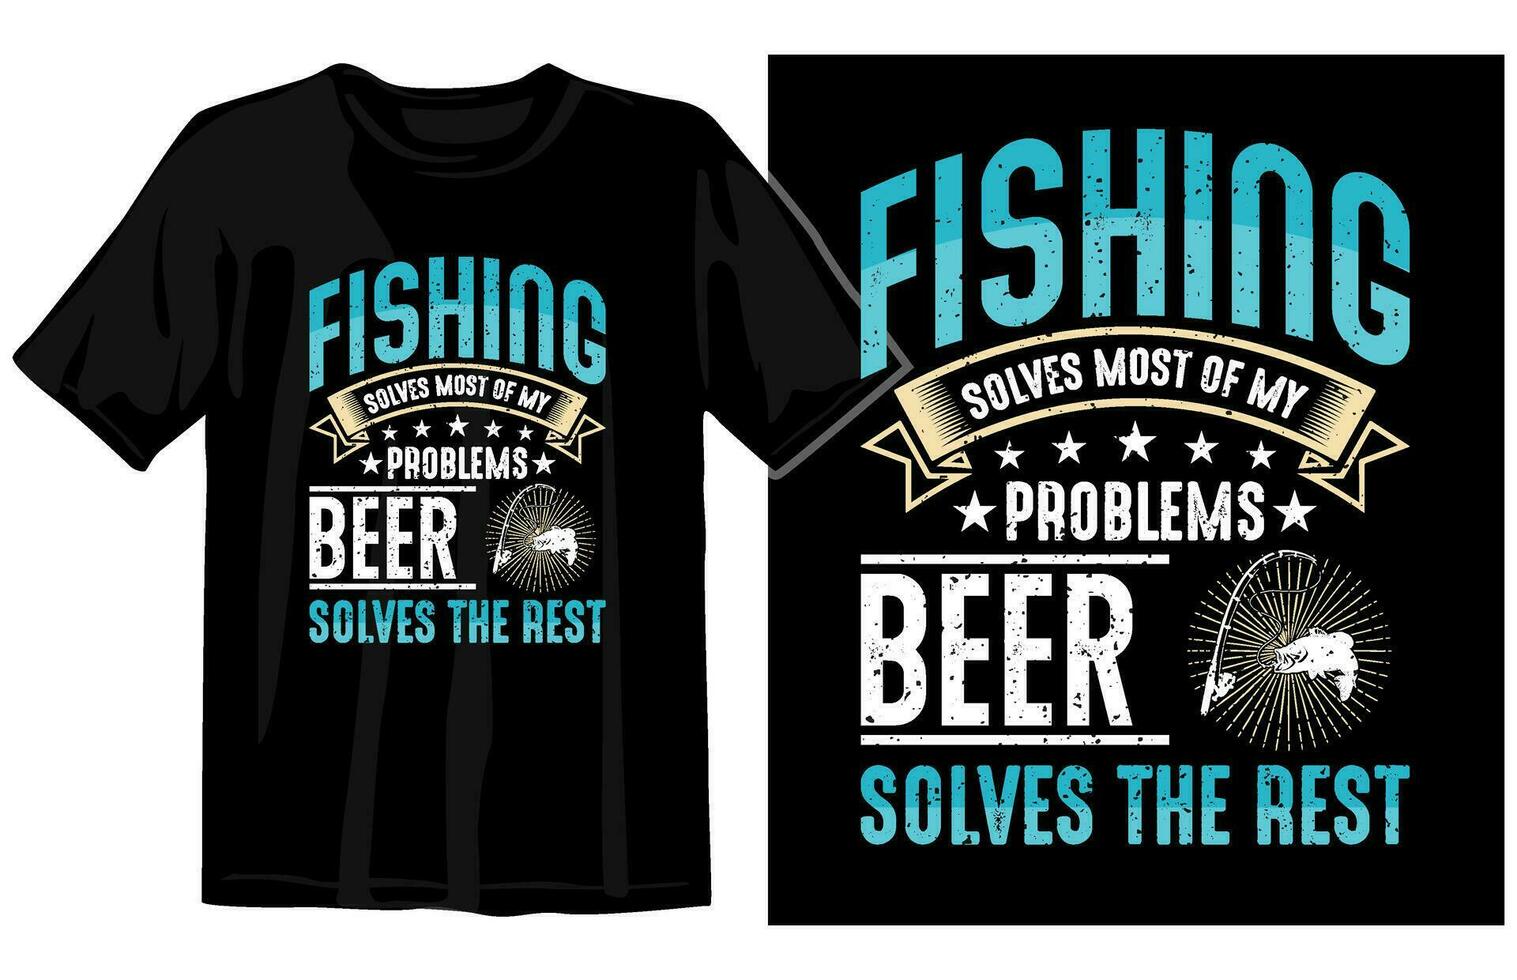 pescaria vintage t camisa Projeto vetor, vintage pescaria t camisa conjunto gráfico ilustração vetor